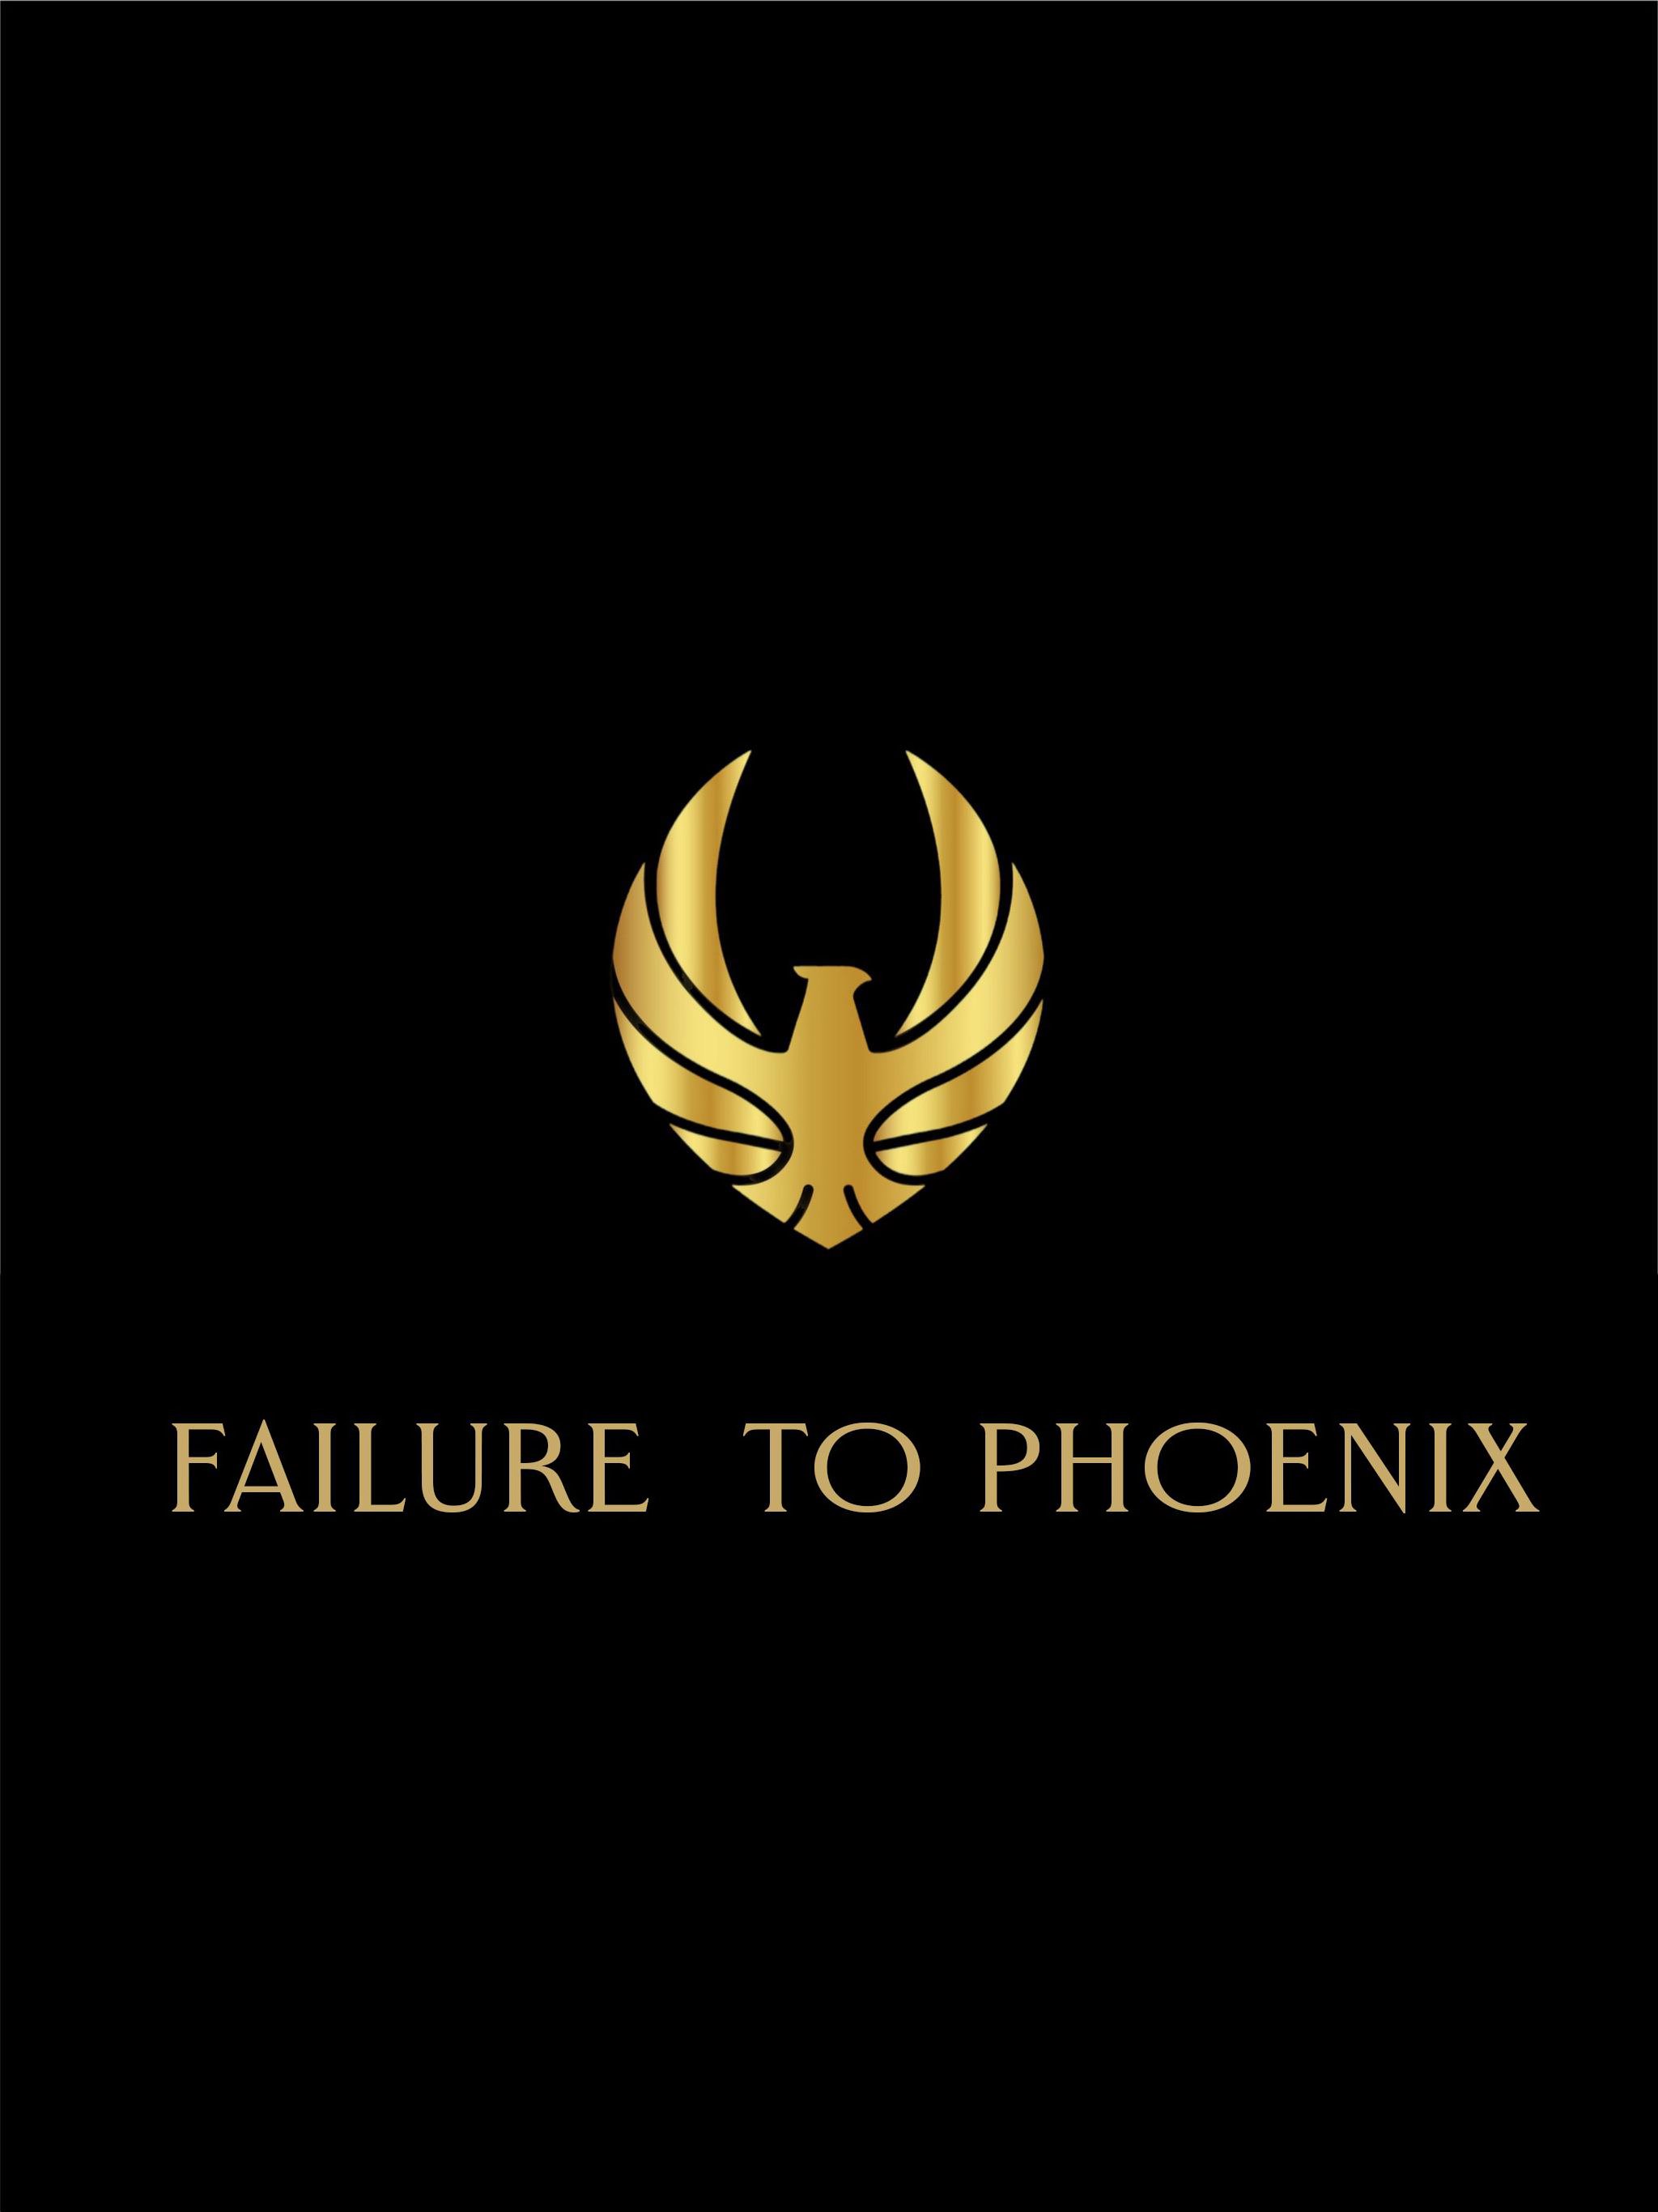  FAILURE TO PHOENIX